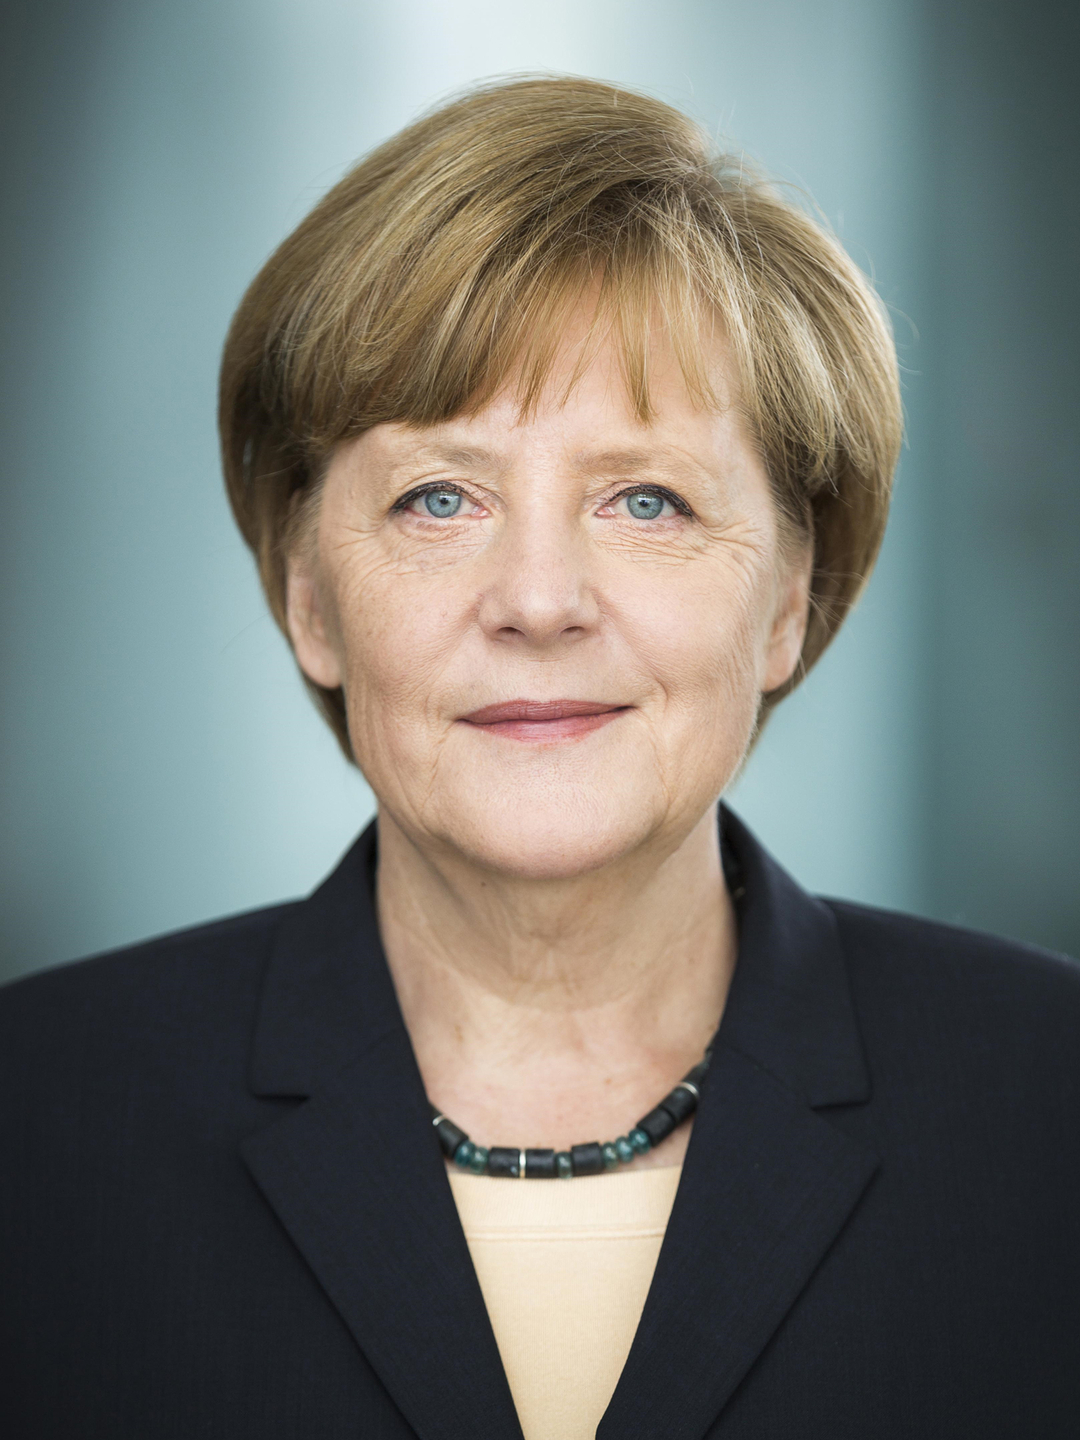 Angela Merkel city of birth